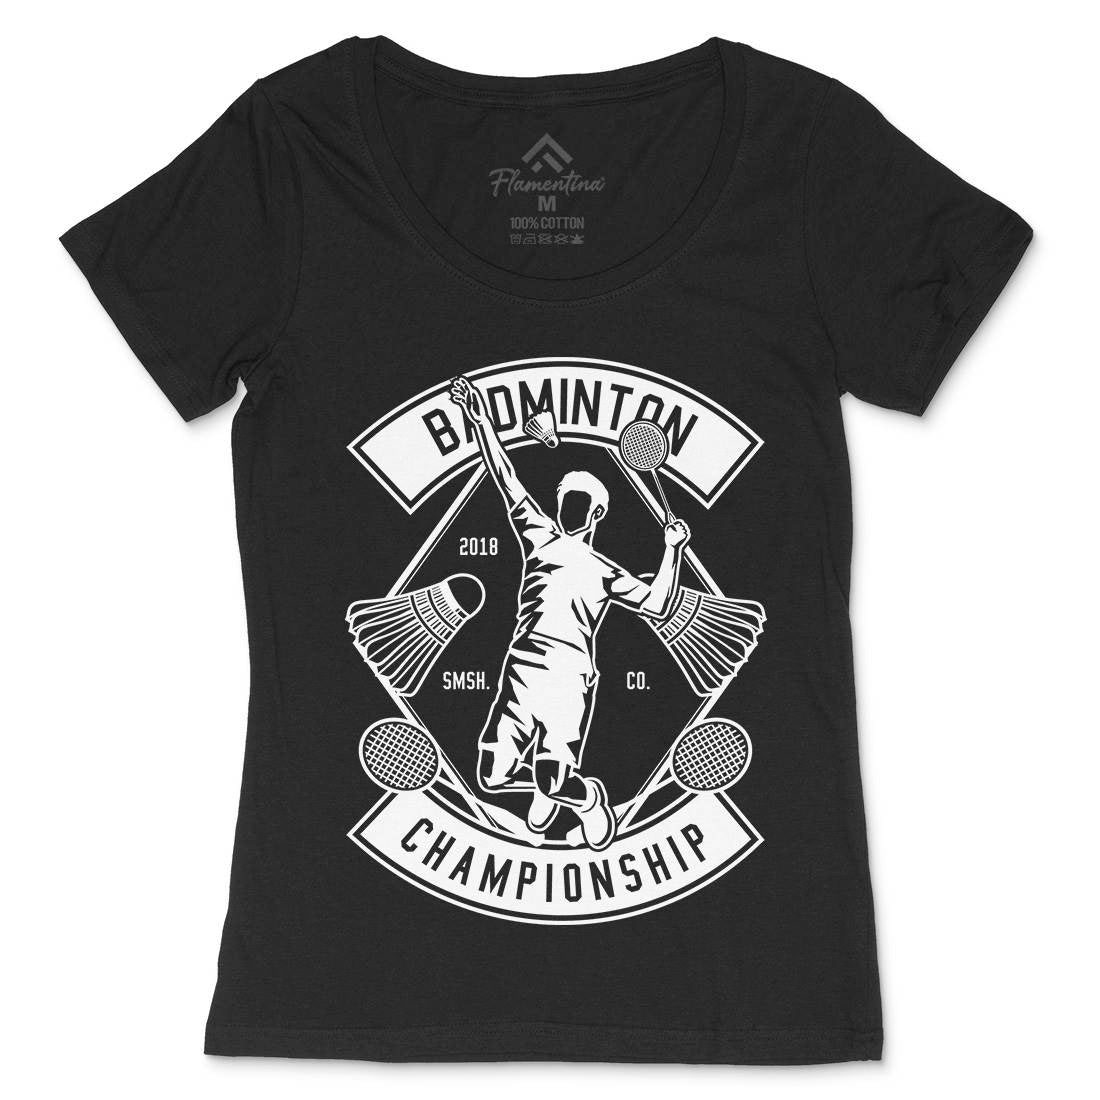 Badminton Championship Womens Scoop Neck T-Shirt Sport B486